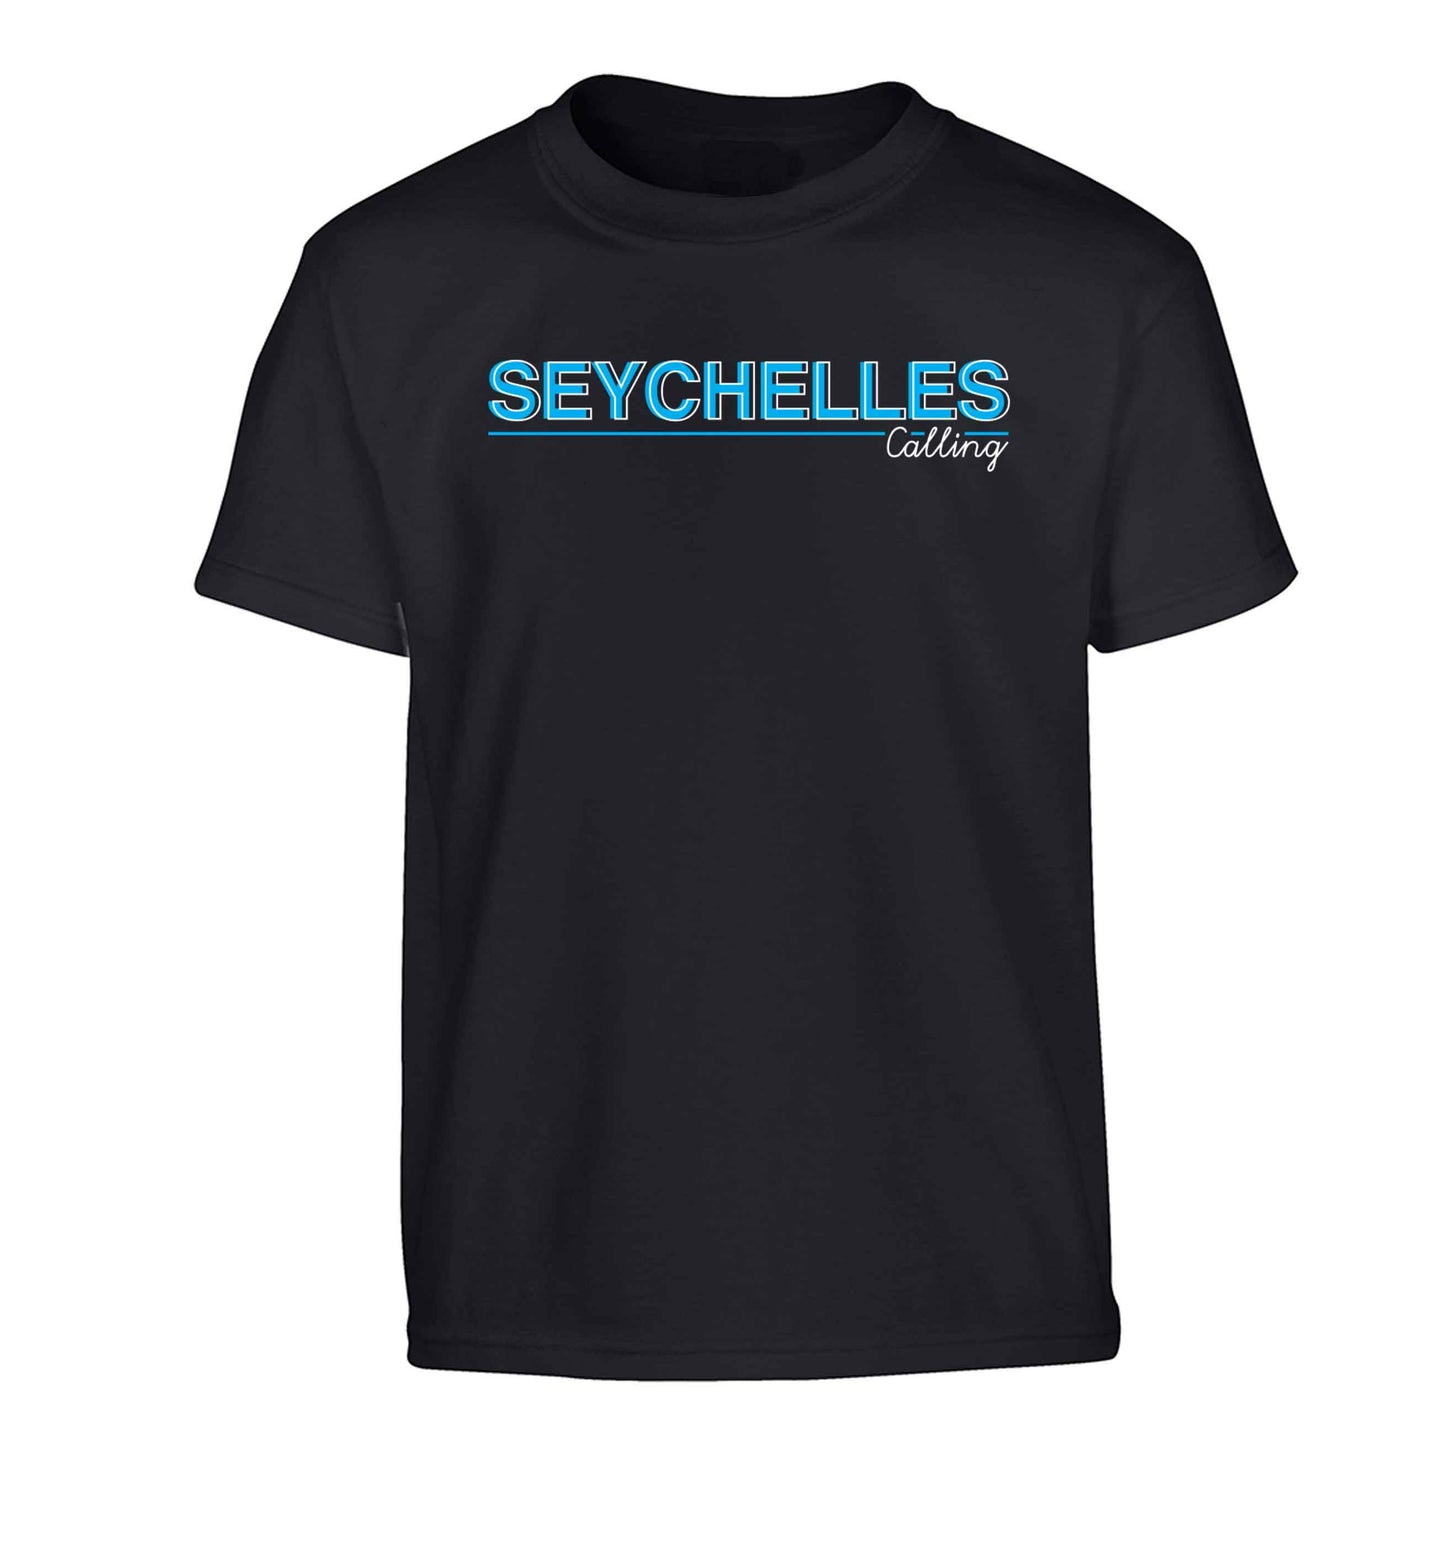 Seychelles calling Children's black Tshirt 12-13 Years